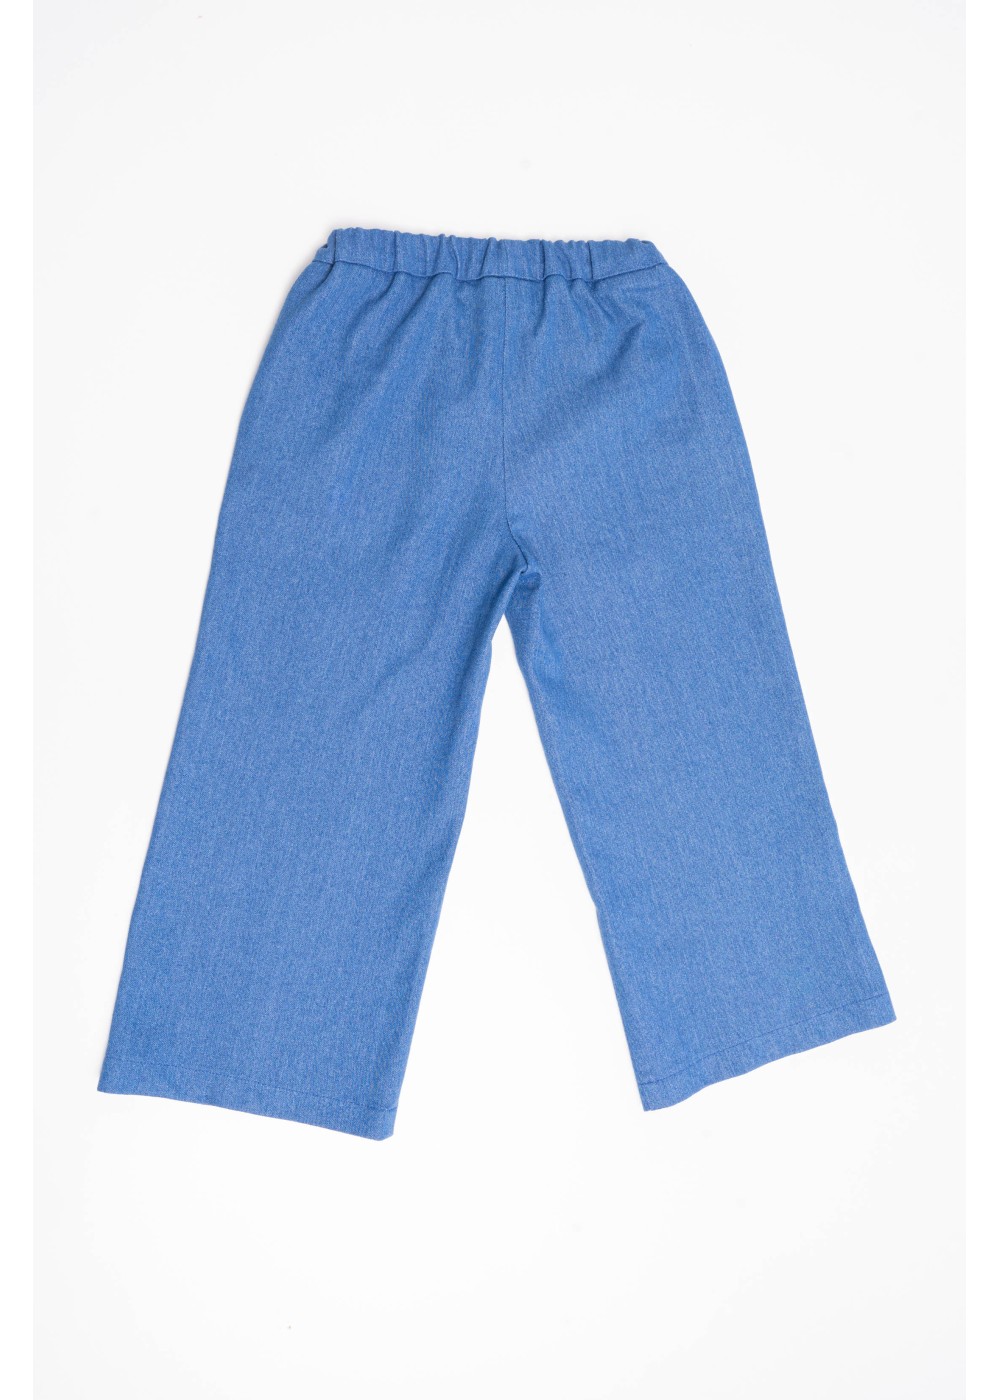 Culotte pants Jana, wide leg jeans, blue, elastic waistband